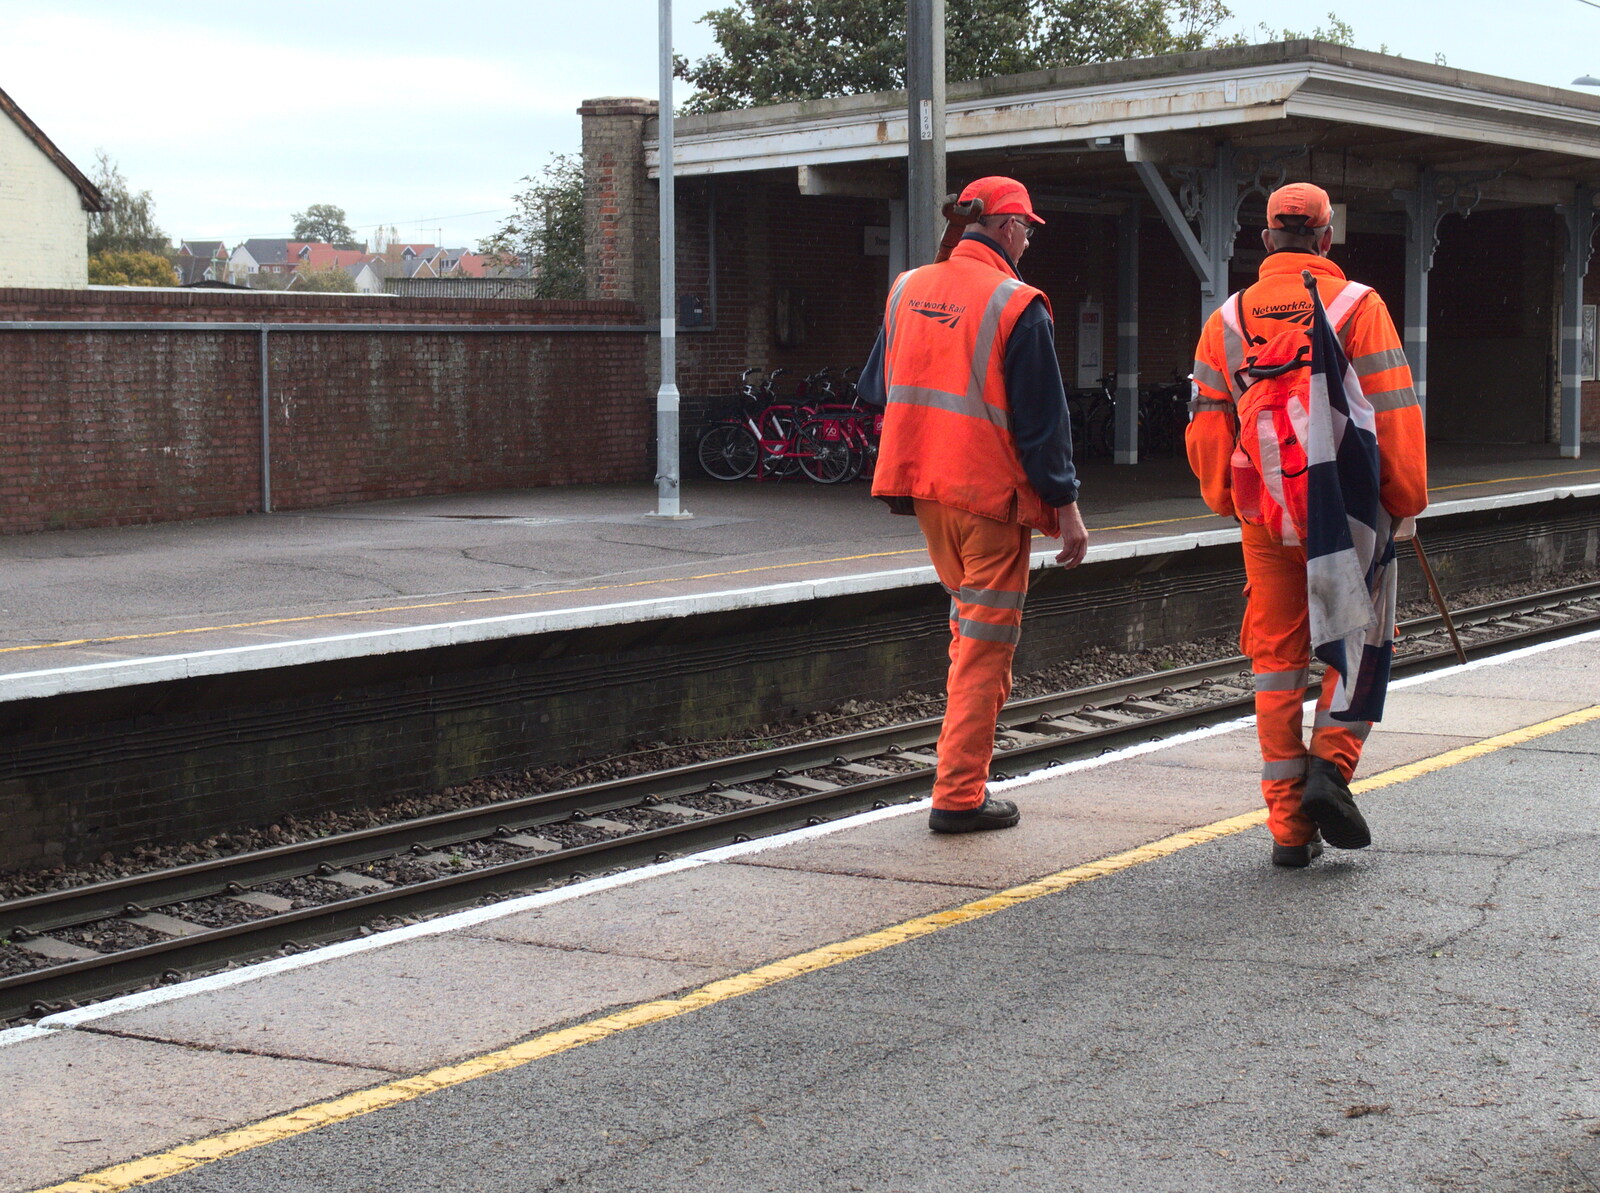 Network Rail dudes walk down the platform from (Very) Long Train (Not) Running, Stowmarket, Suffolk - 21st October 2014